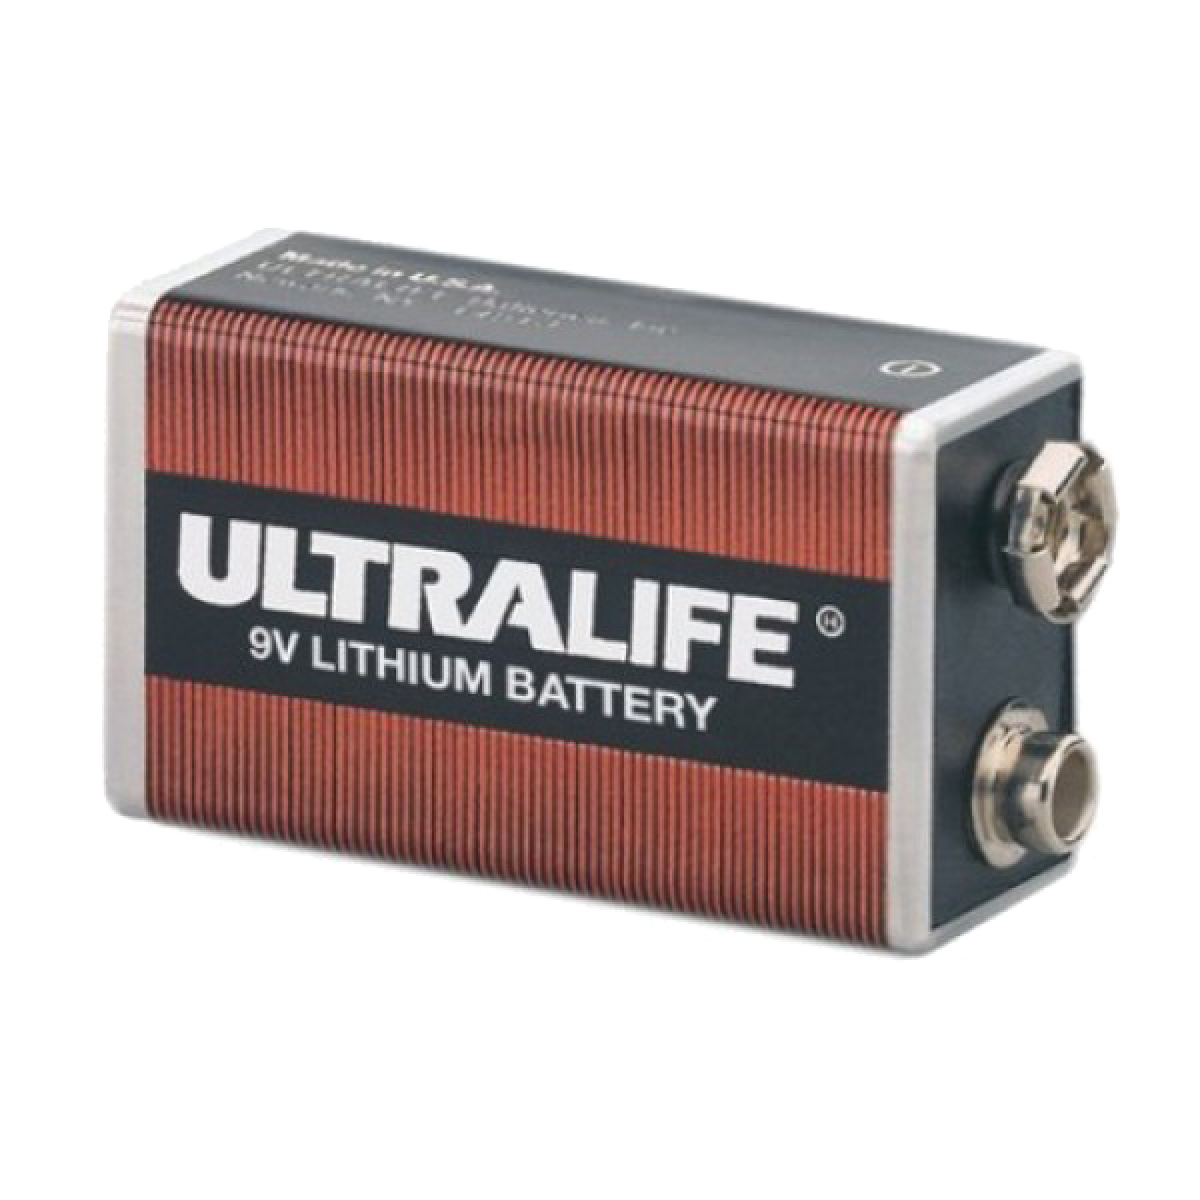 Middellandse Zee Slink stok Defibtech Lifeline Lithium Batterij 9 volt